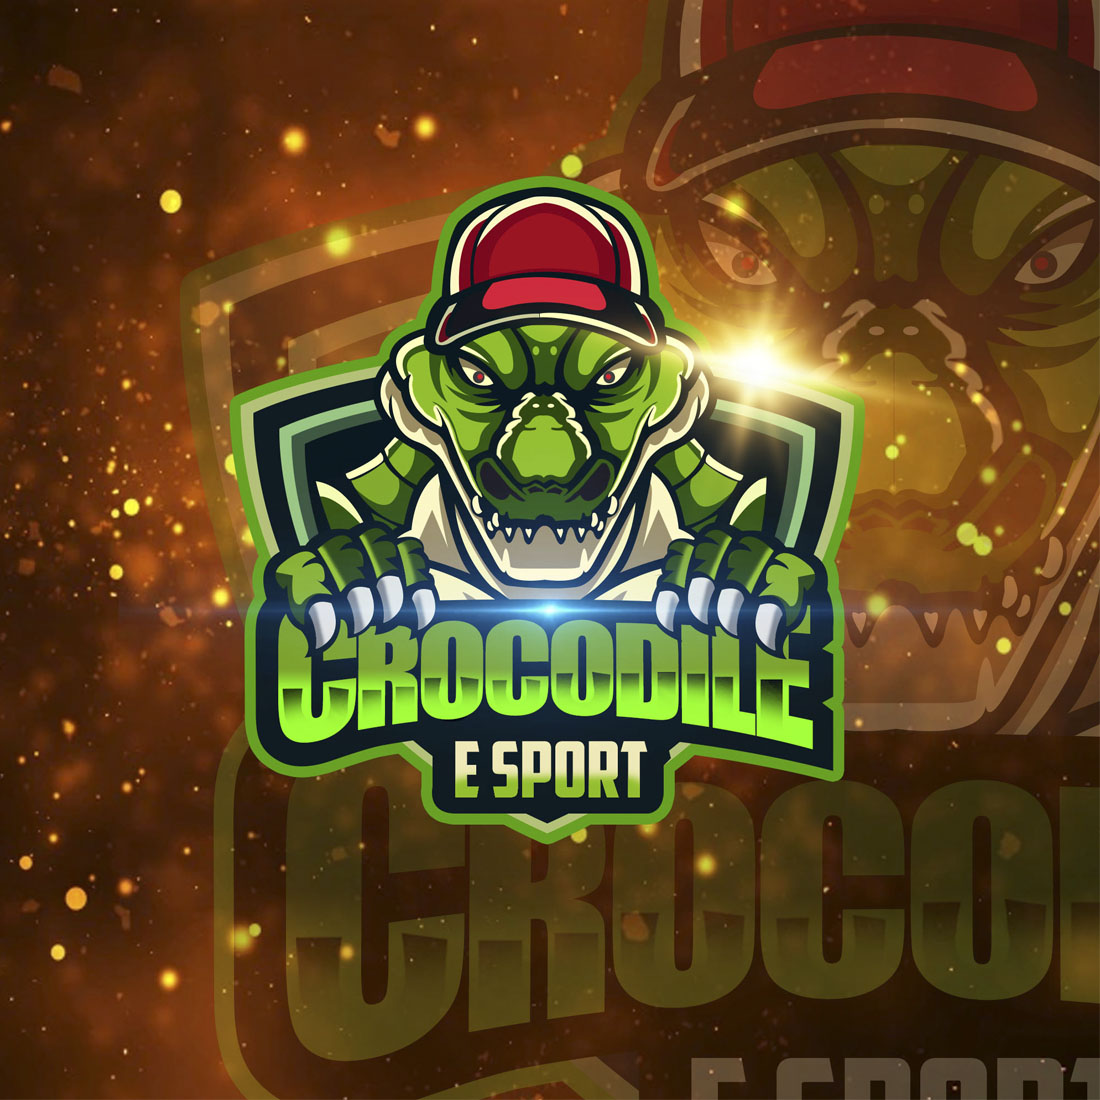 Free: crocodile cartoon character mascot logo - nohat.cc